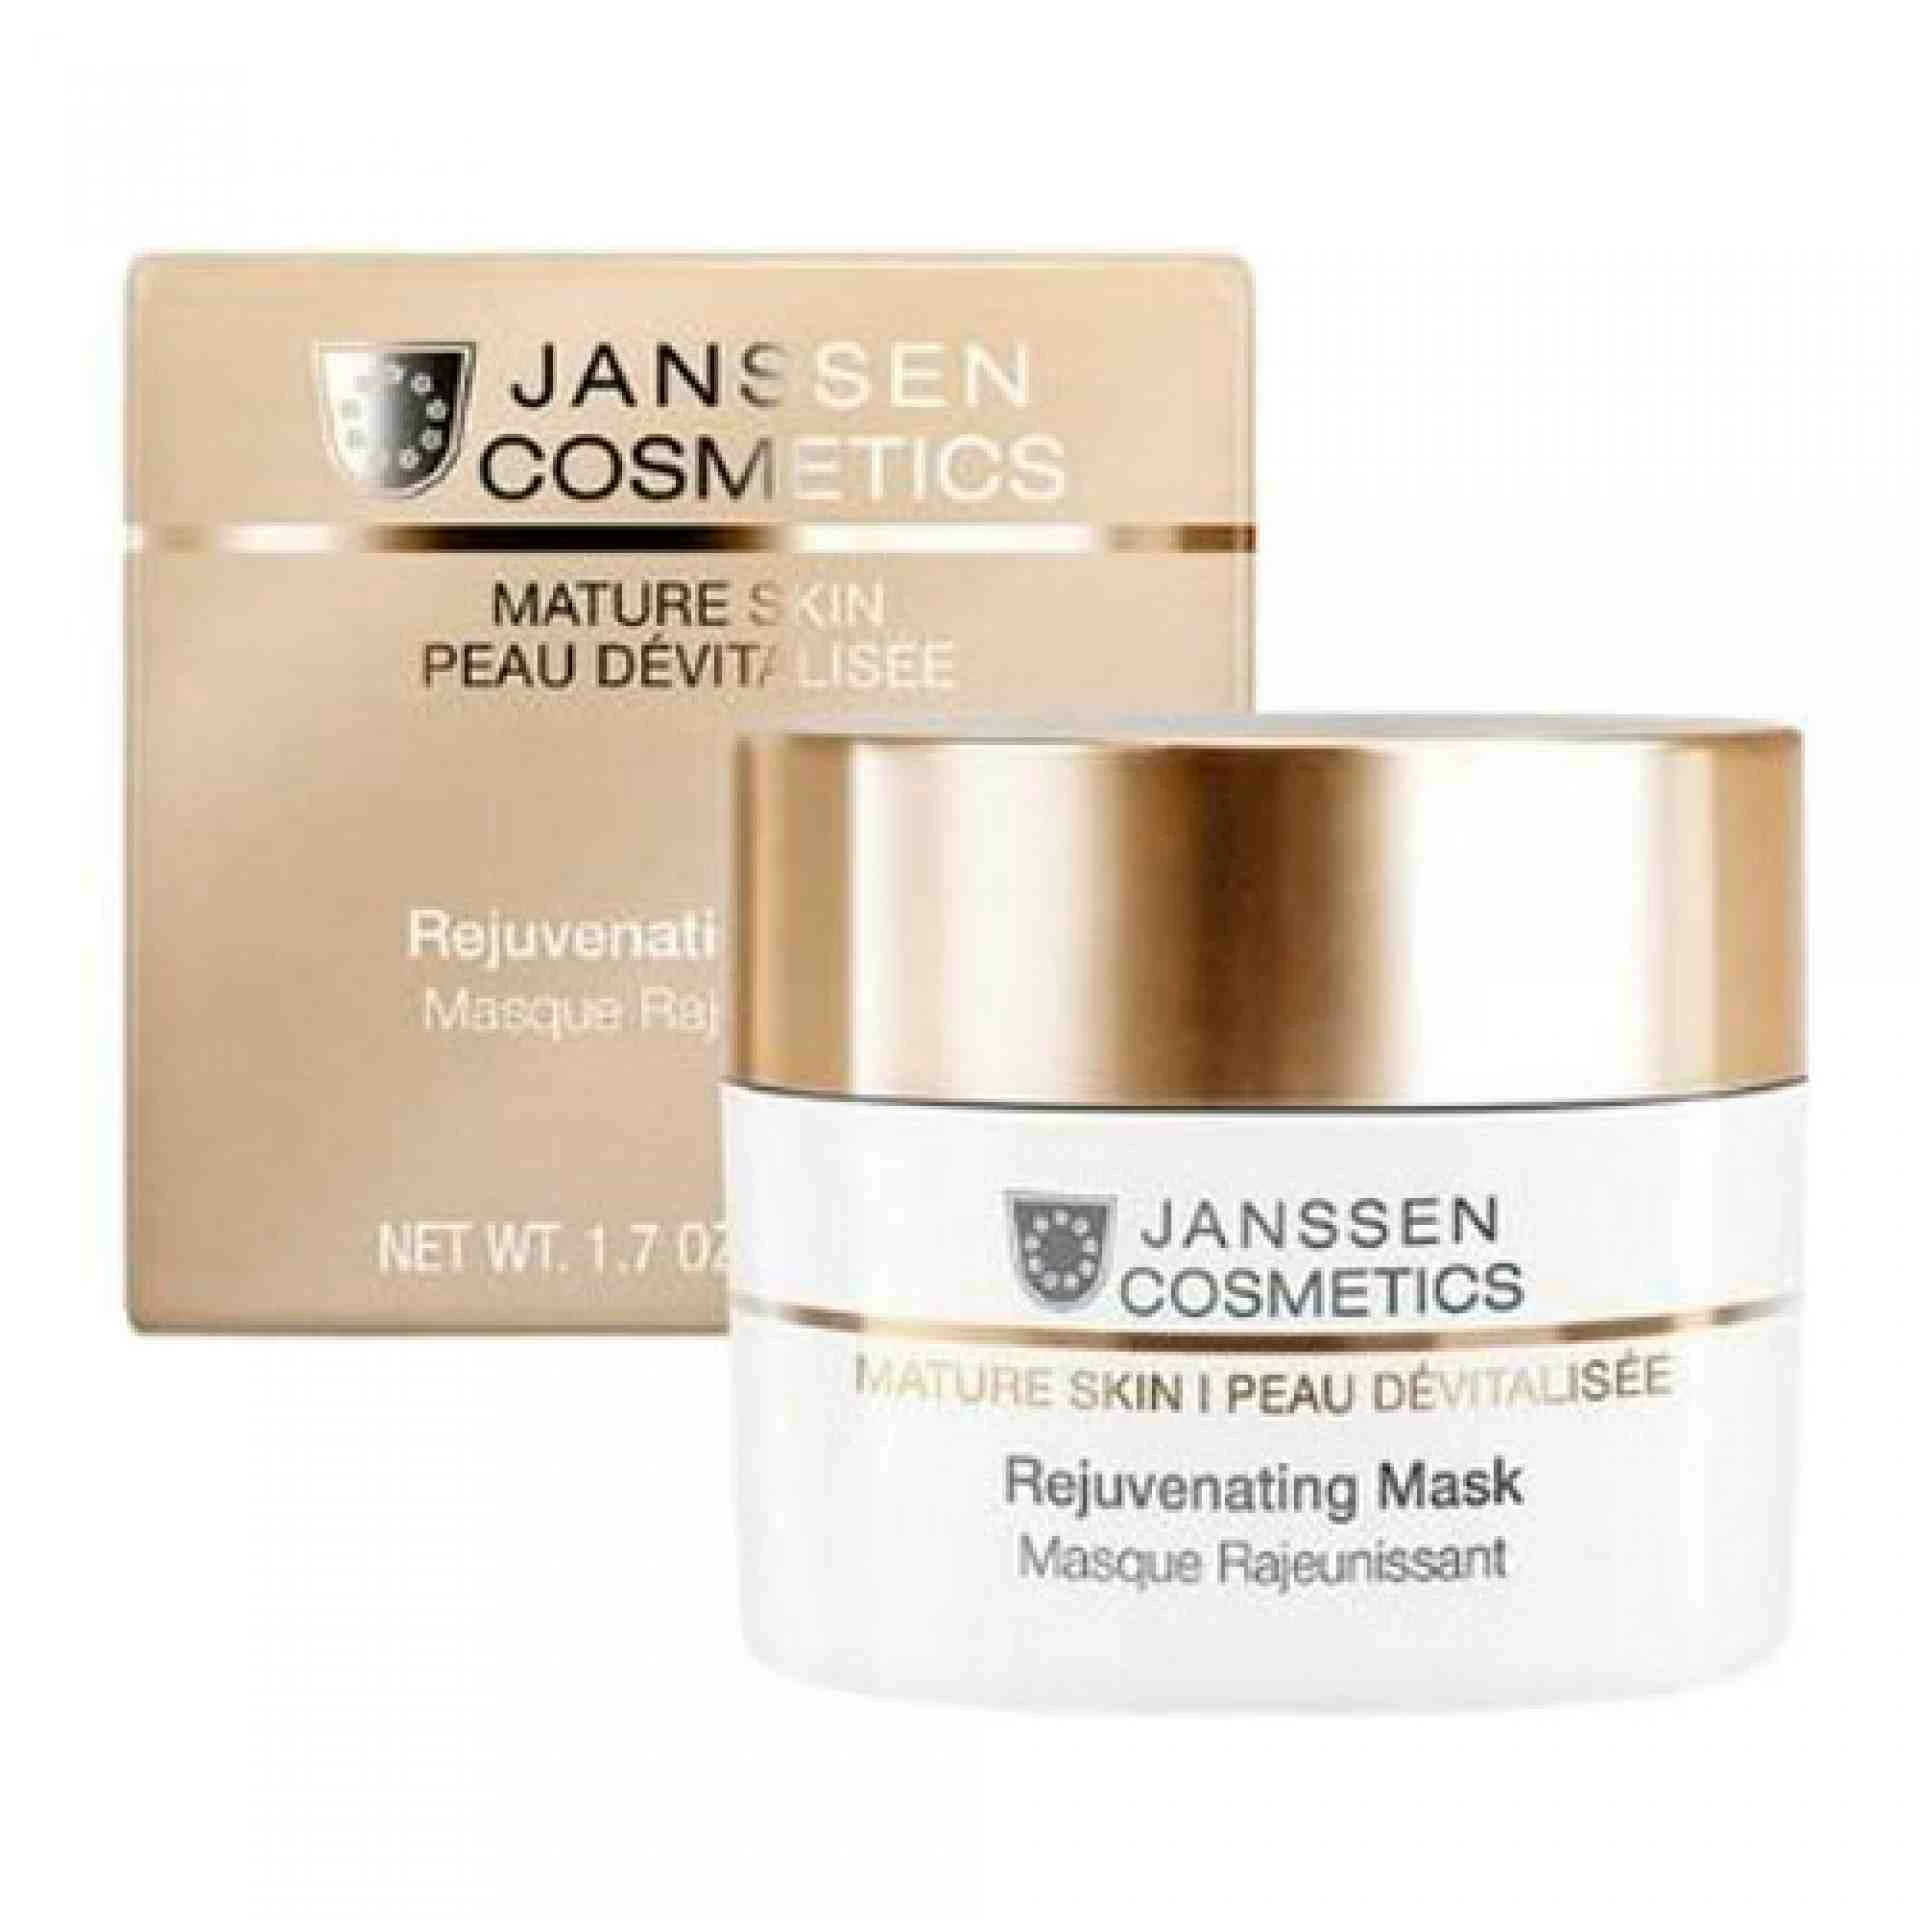 Mature Skin Rejuvenating Mask 50ml Janssen Cosmetics®